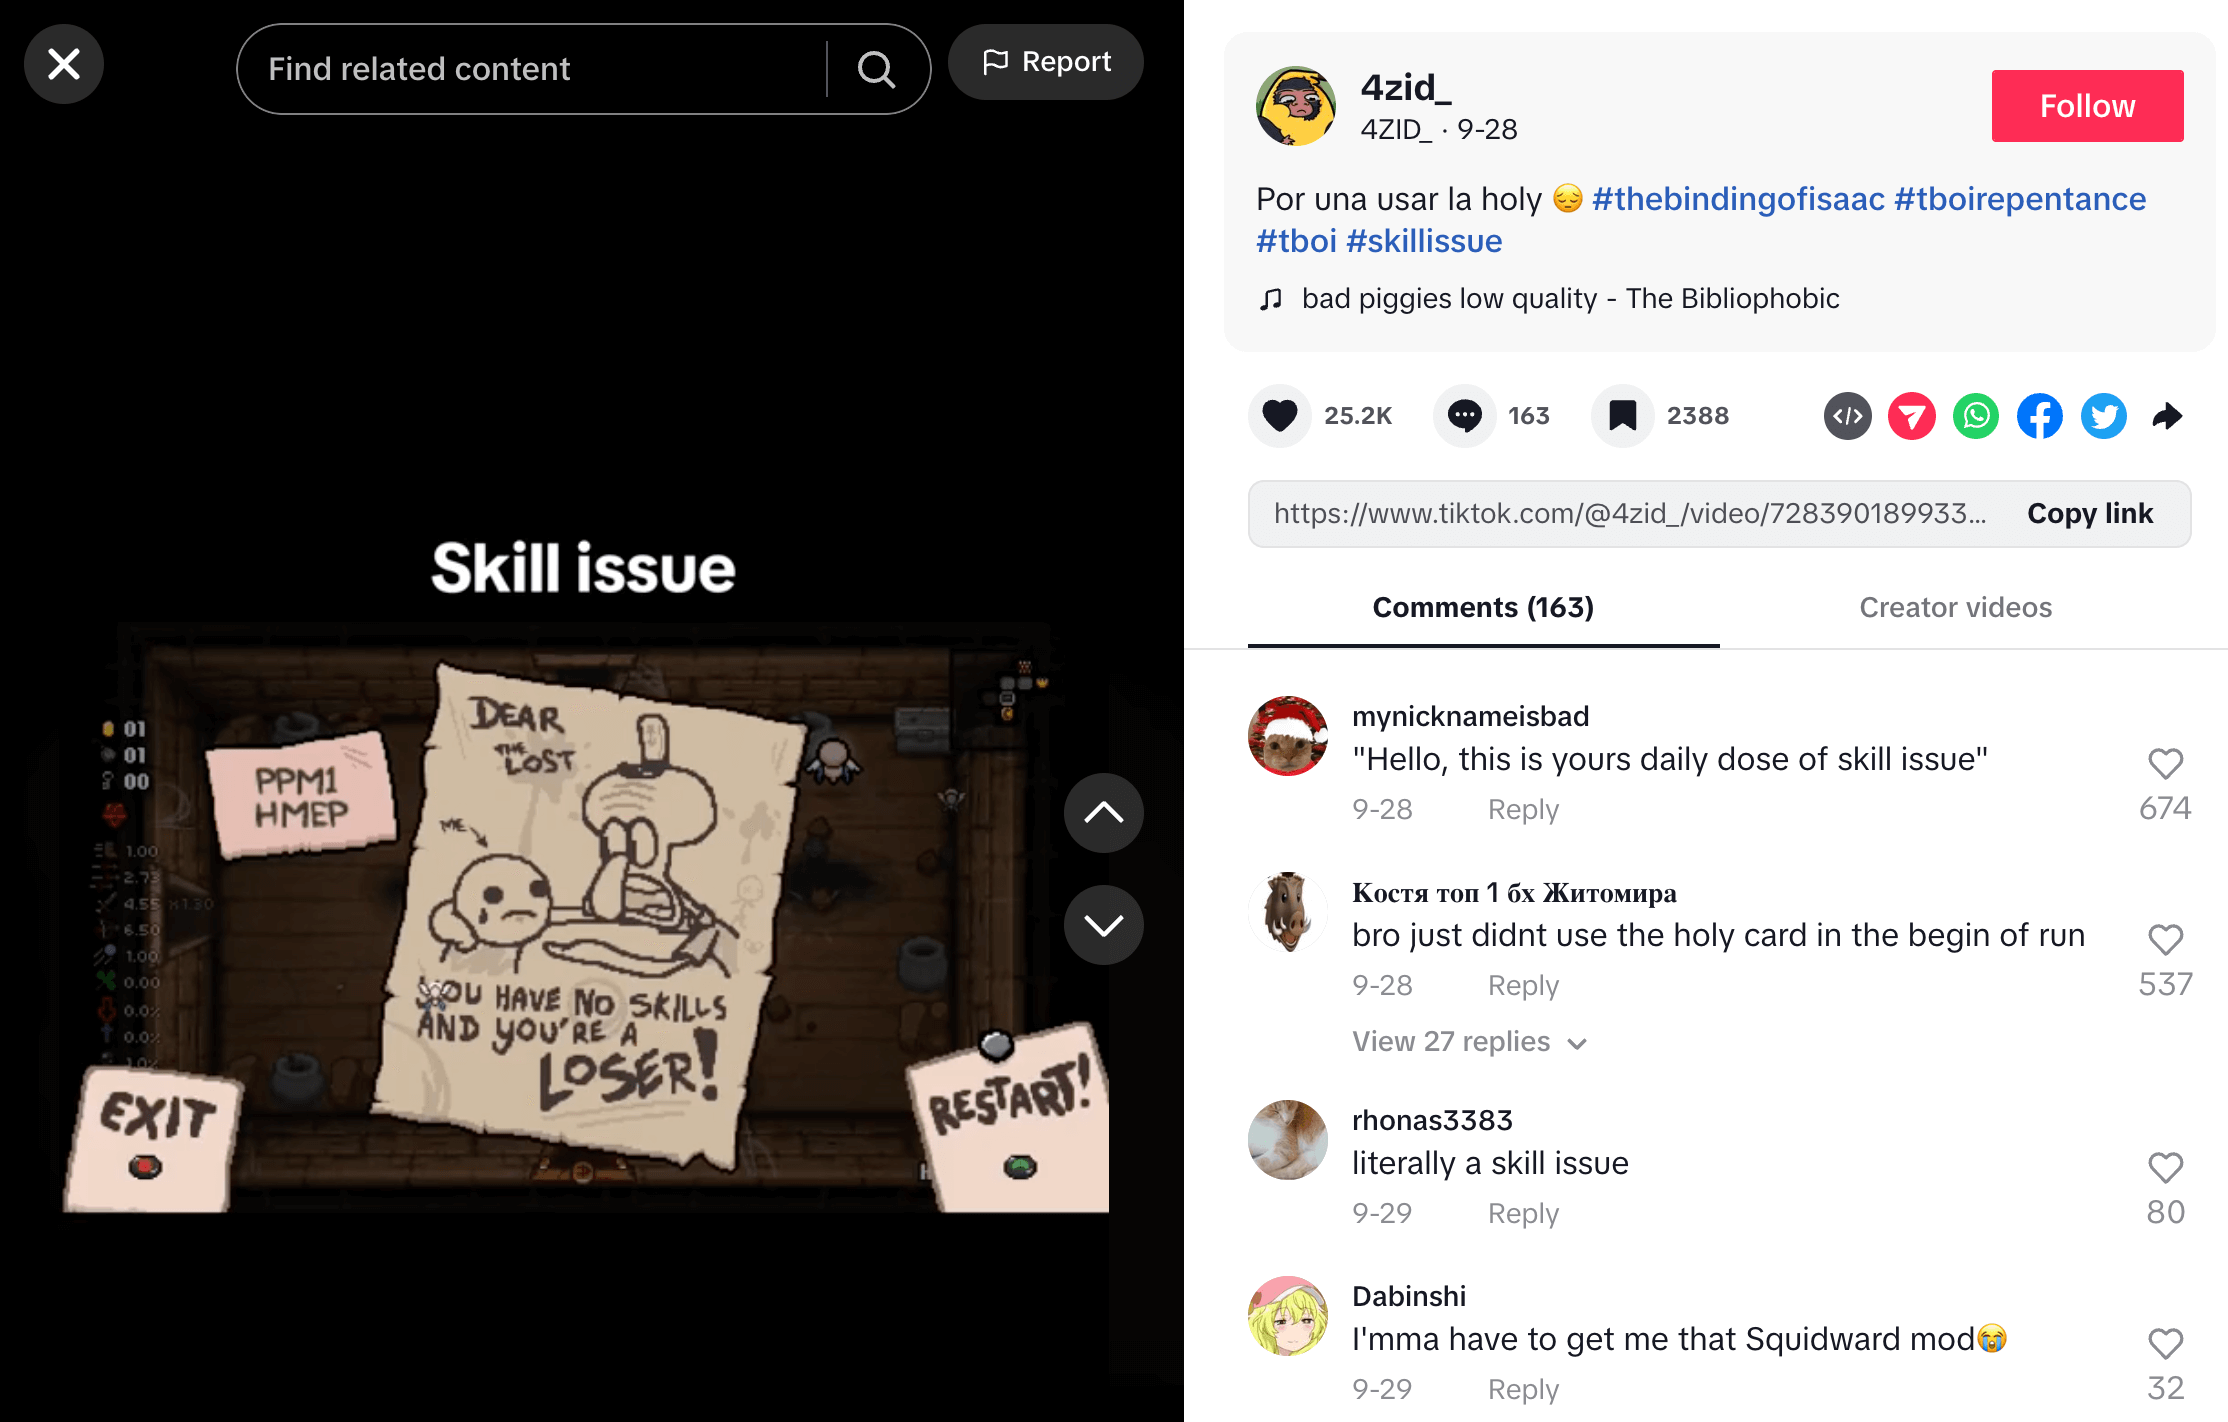 Several uses of skill issue on TikTok